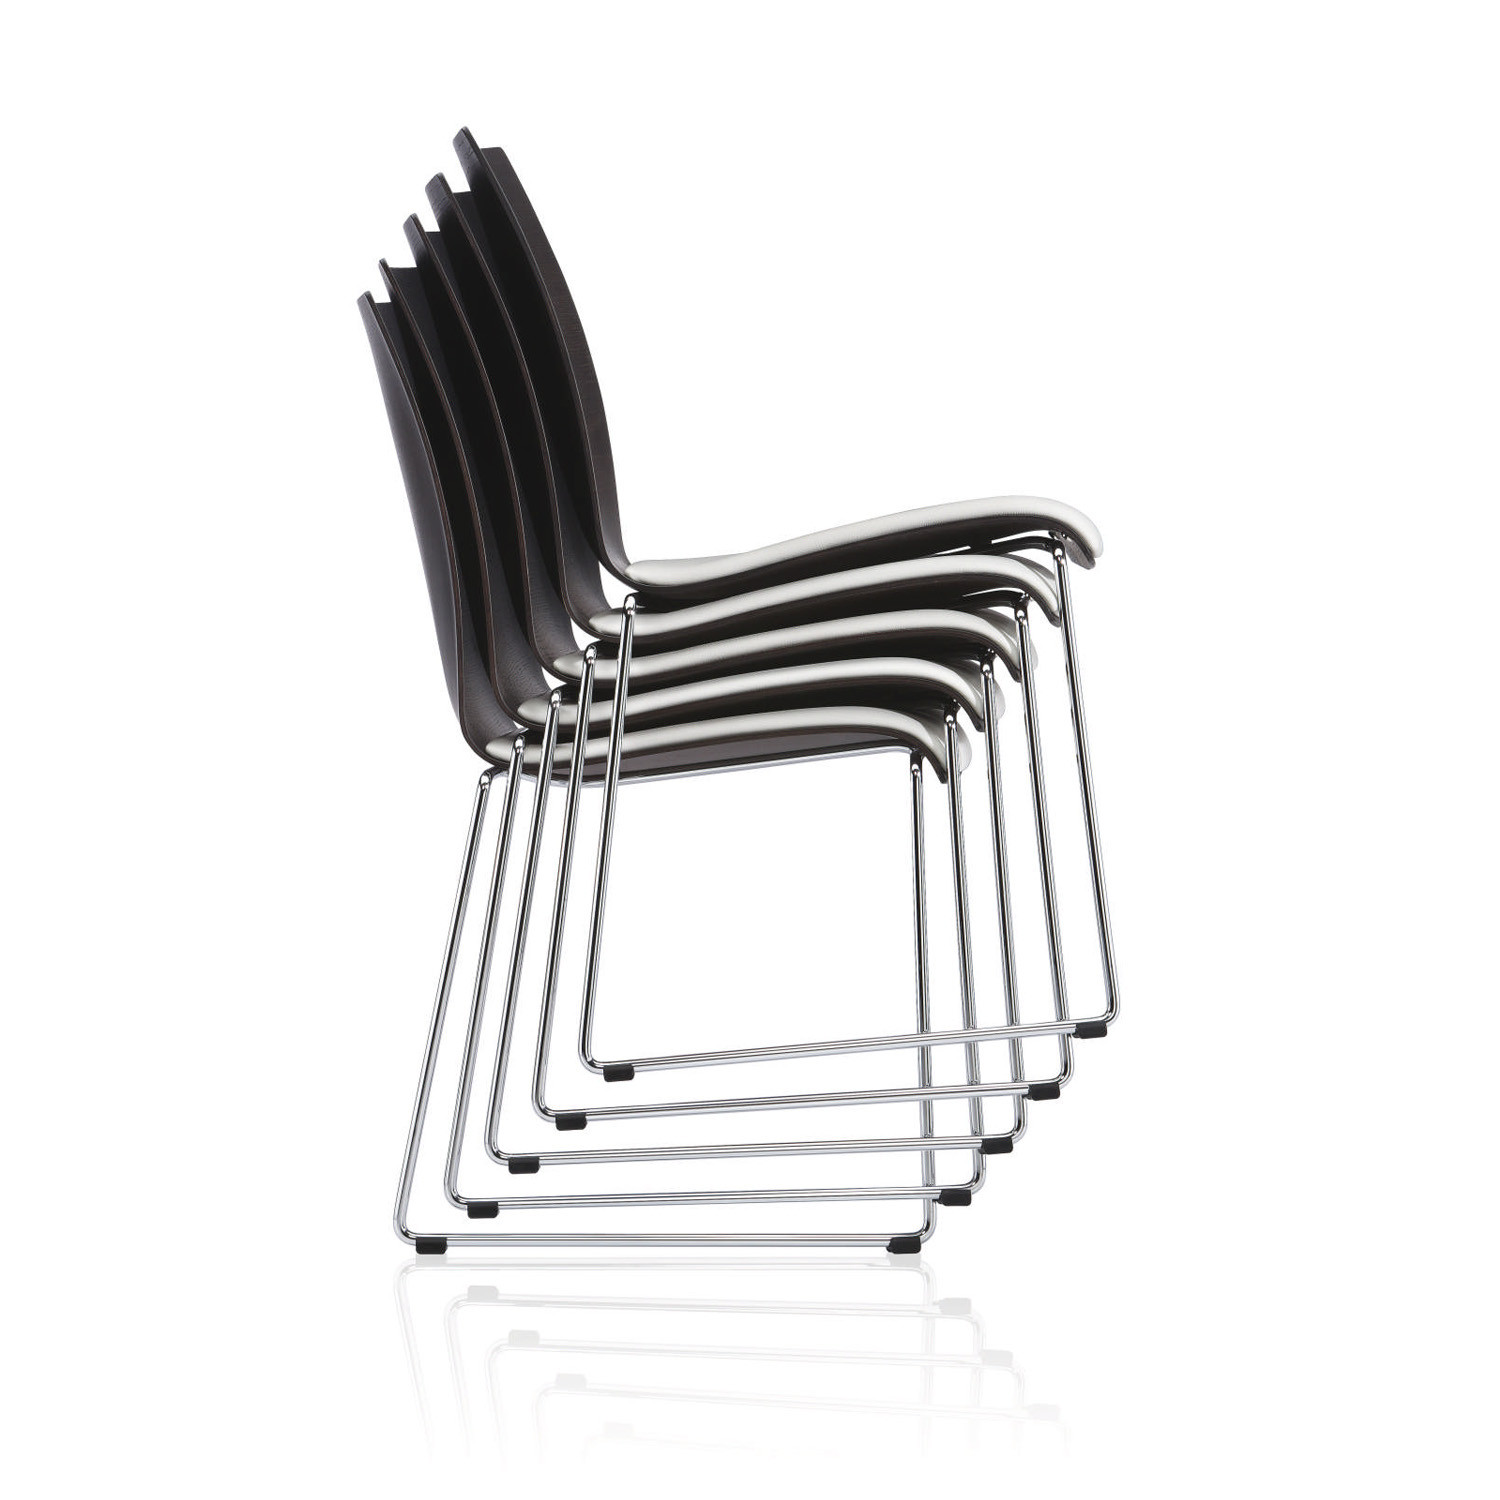 Fina Plastic Chair stacks up yo 5 chairs